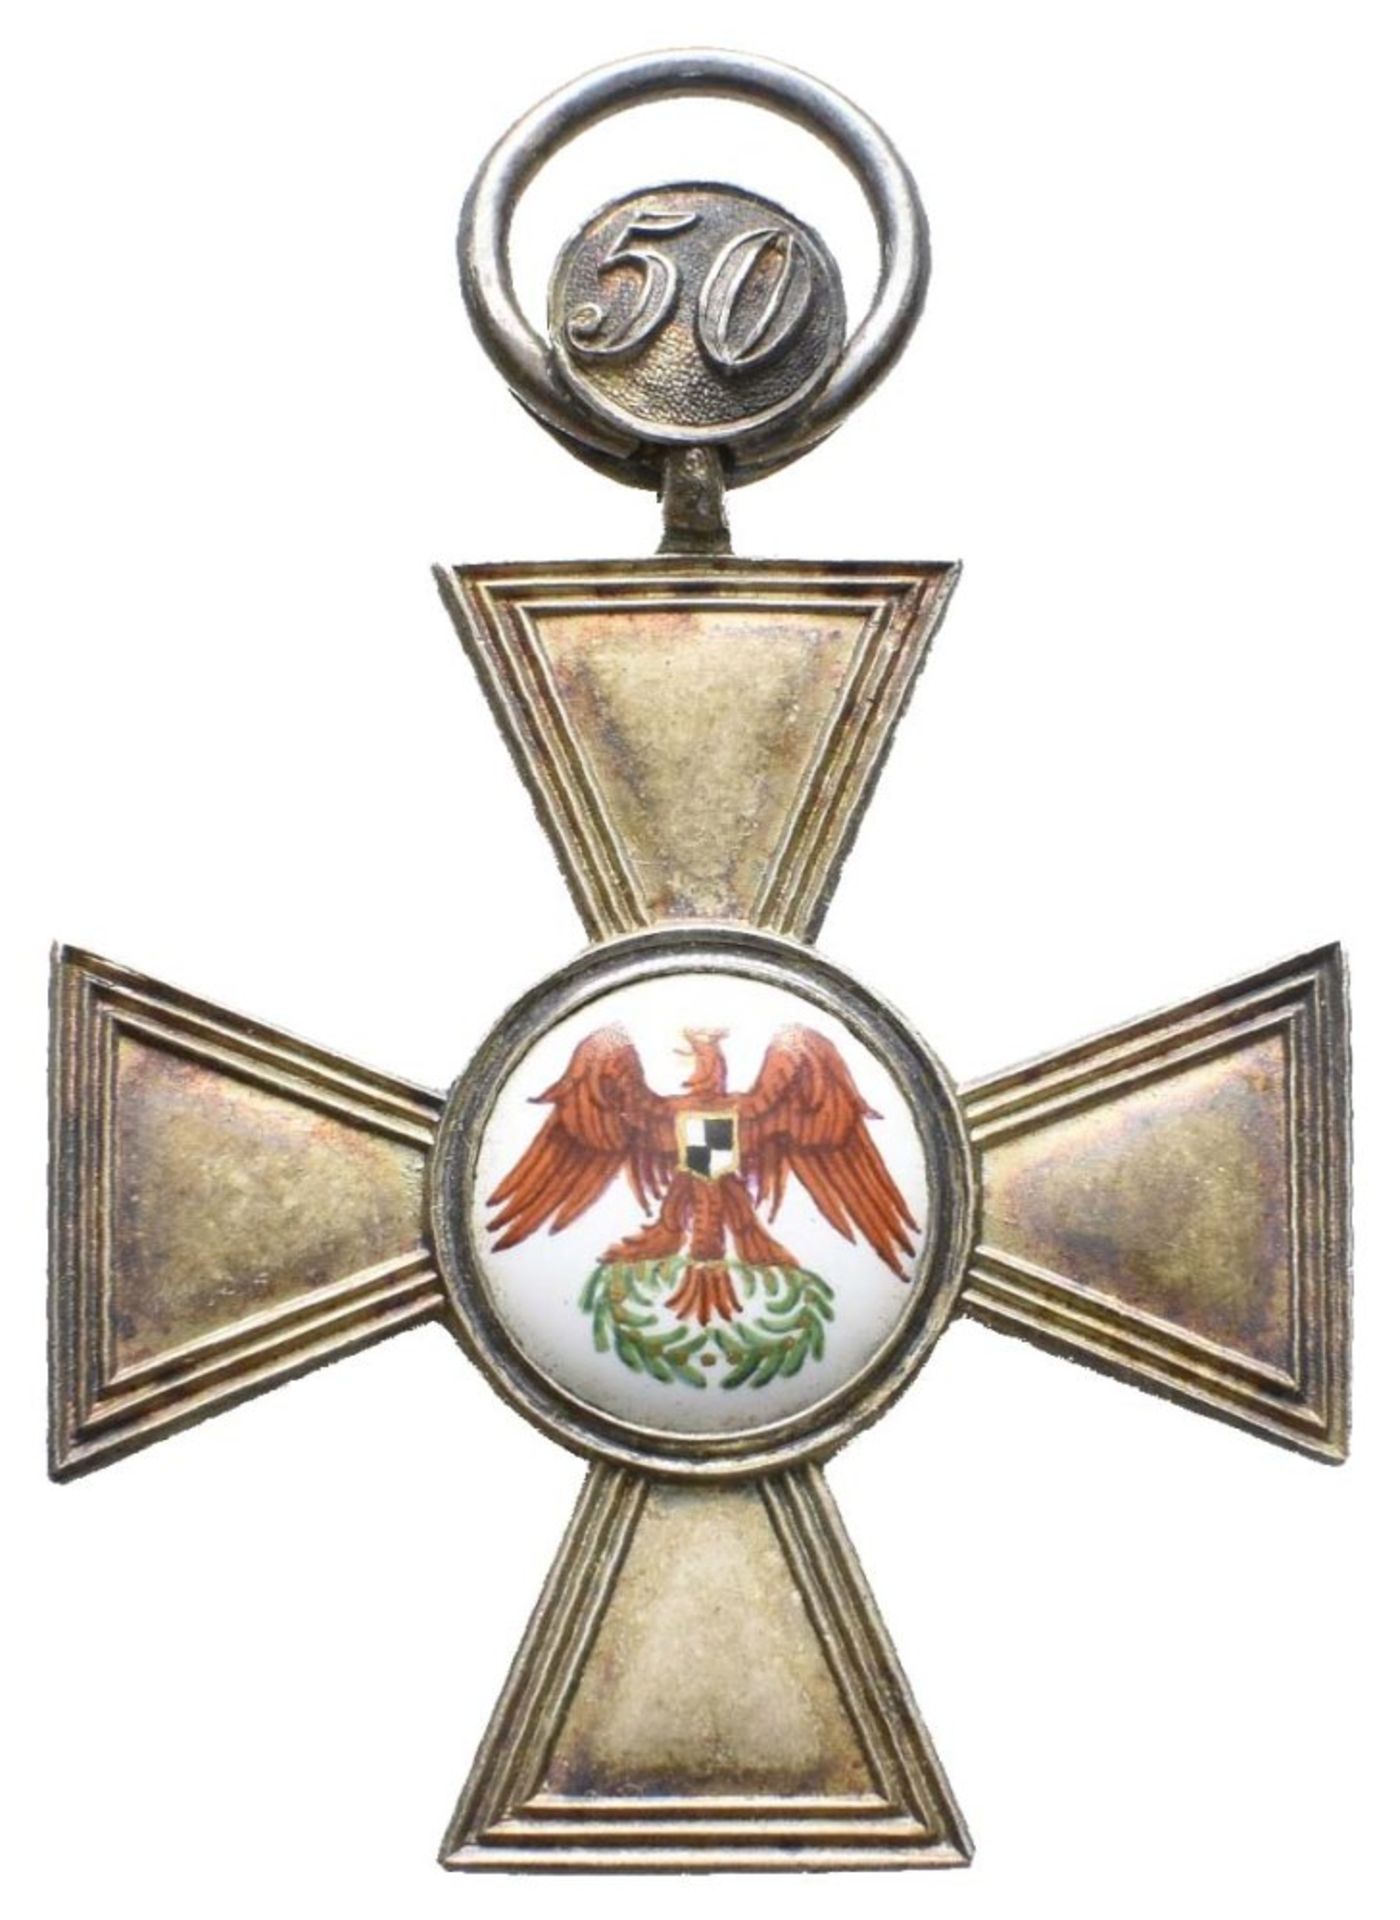 Preußen, Roter Adler Orden, Kreuz 4. Klasse, Silber, glatte Arme, mit Jubiläumszahl 50, OEK 1702, - Image 2 of 4